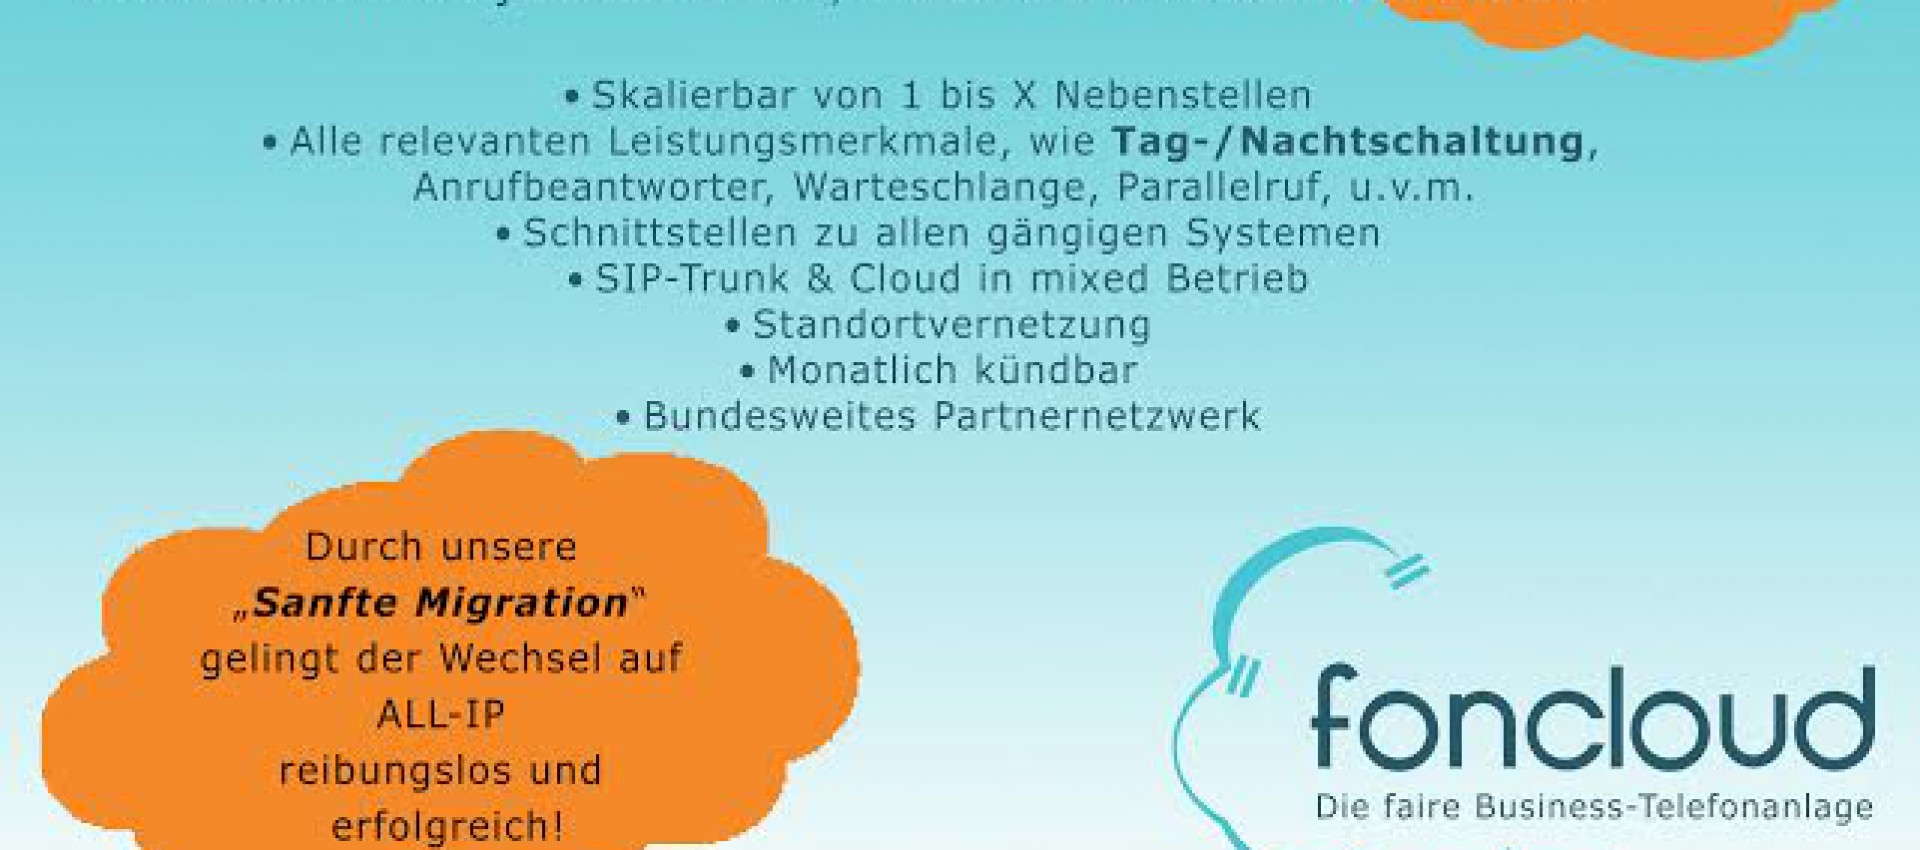 Foncloud ersetzt Telefonanlage mehr bei Telepartner Armbruster in Offenburg